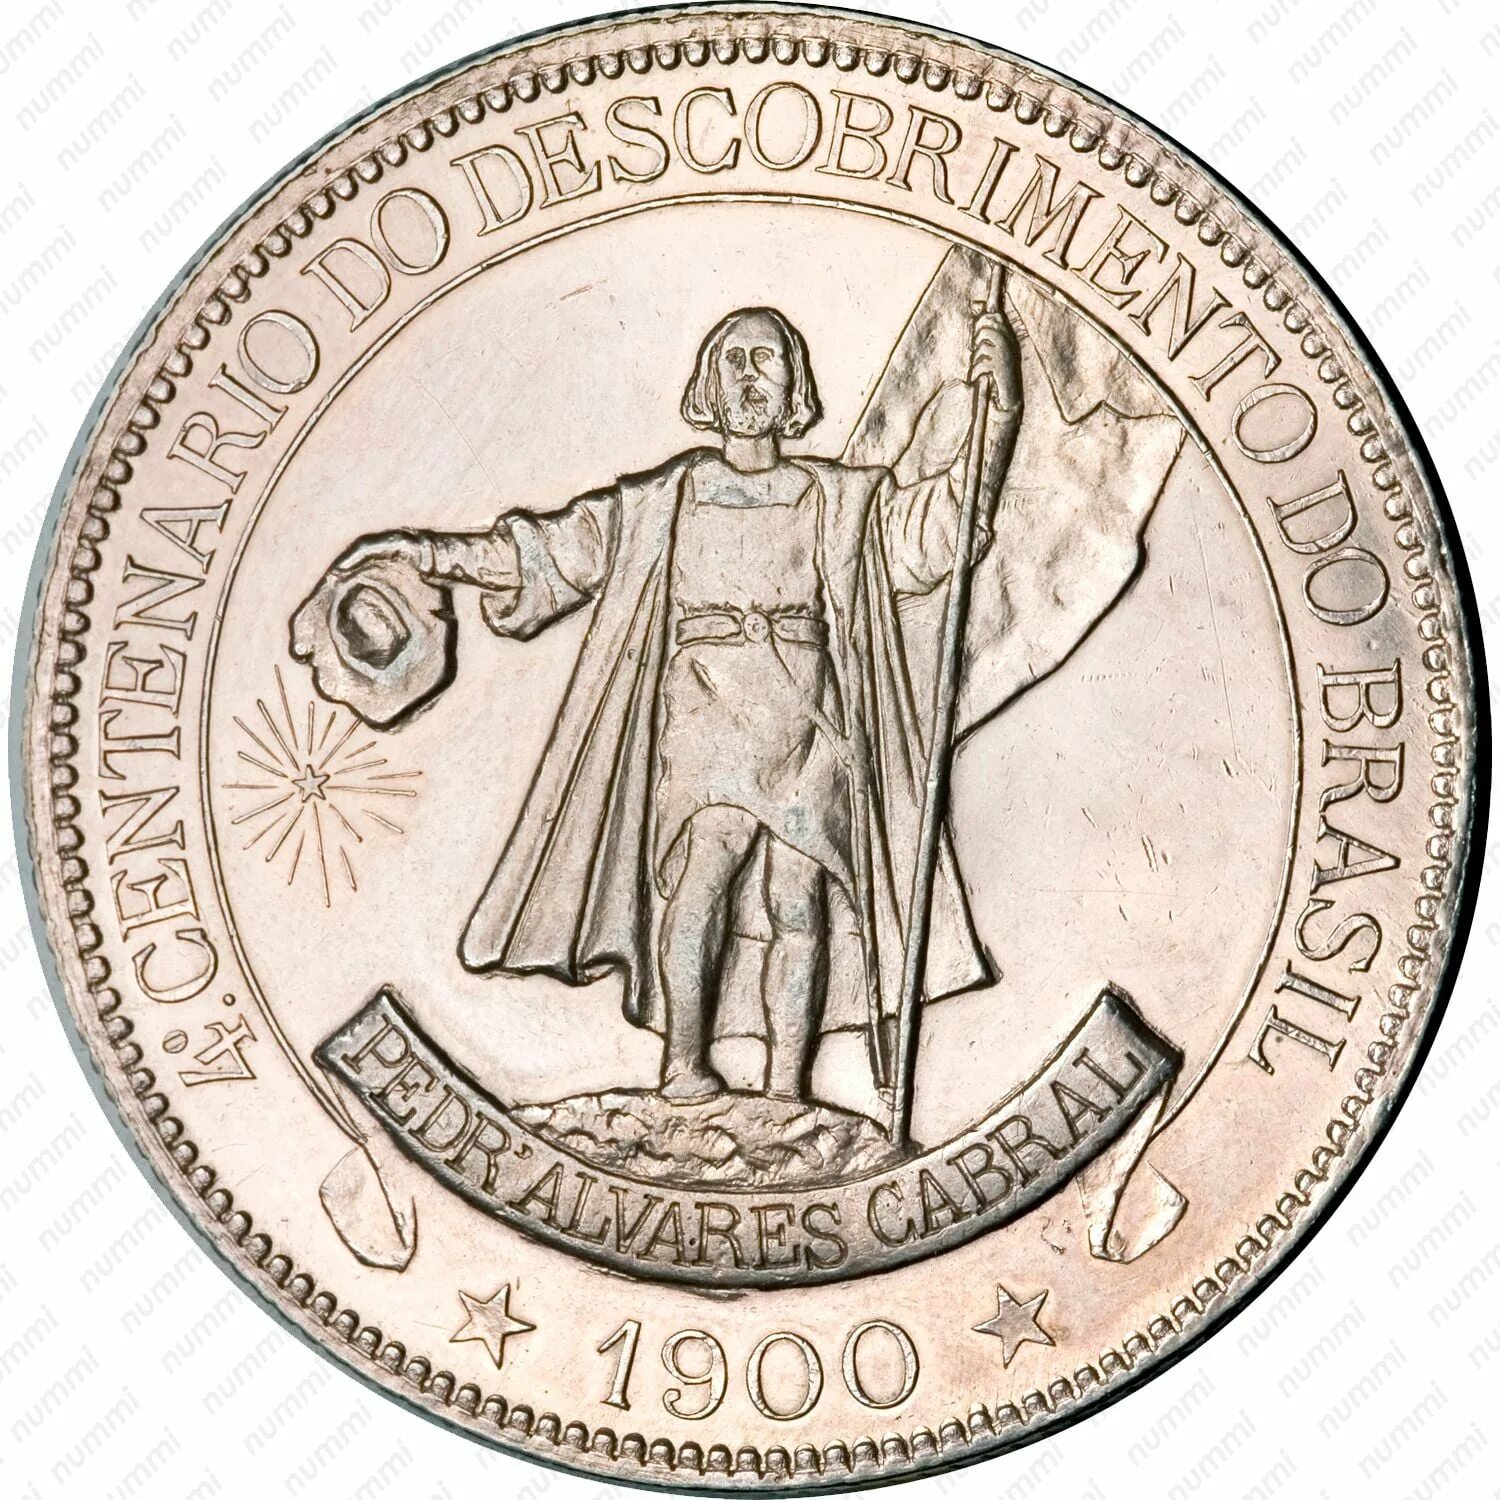 4000 Рейс 1900 открытие Бразилии. Coins of Brazil. Американские монеты от 1900. Brazil 1000 Réis 1900 (4th Centenary of Brazilian Discovery.